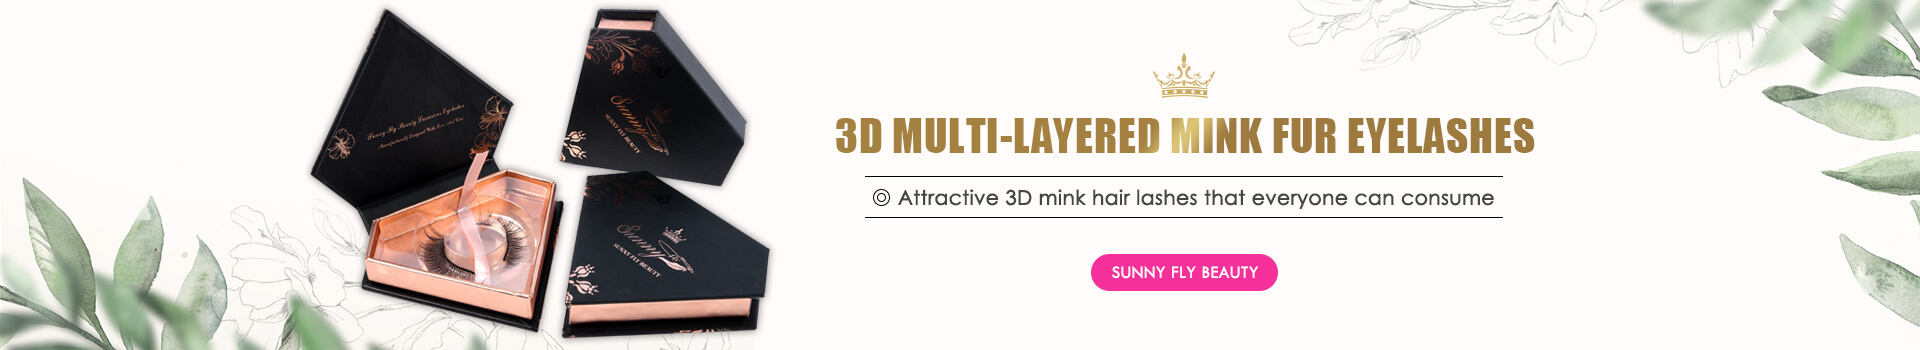 3D Multi-layered Mink Fur Eyelashes MG97